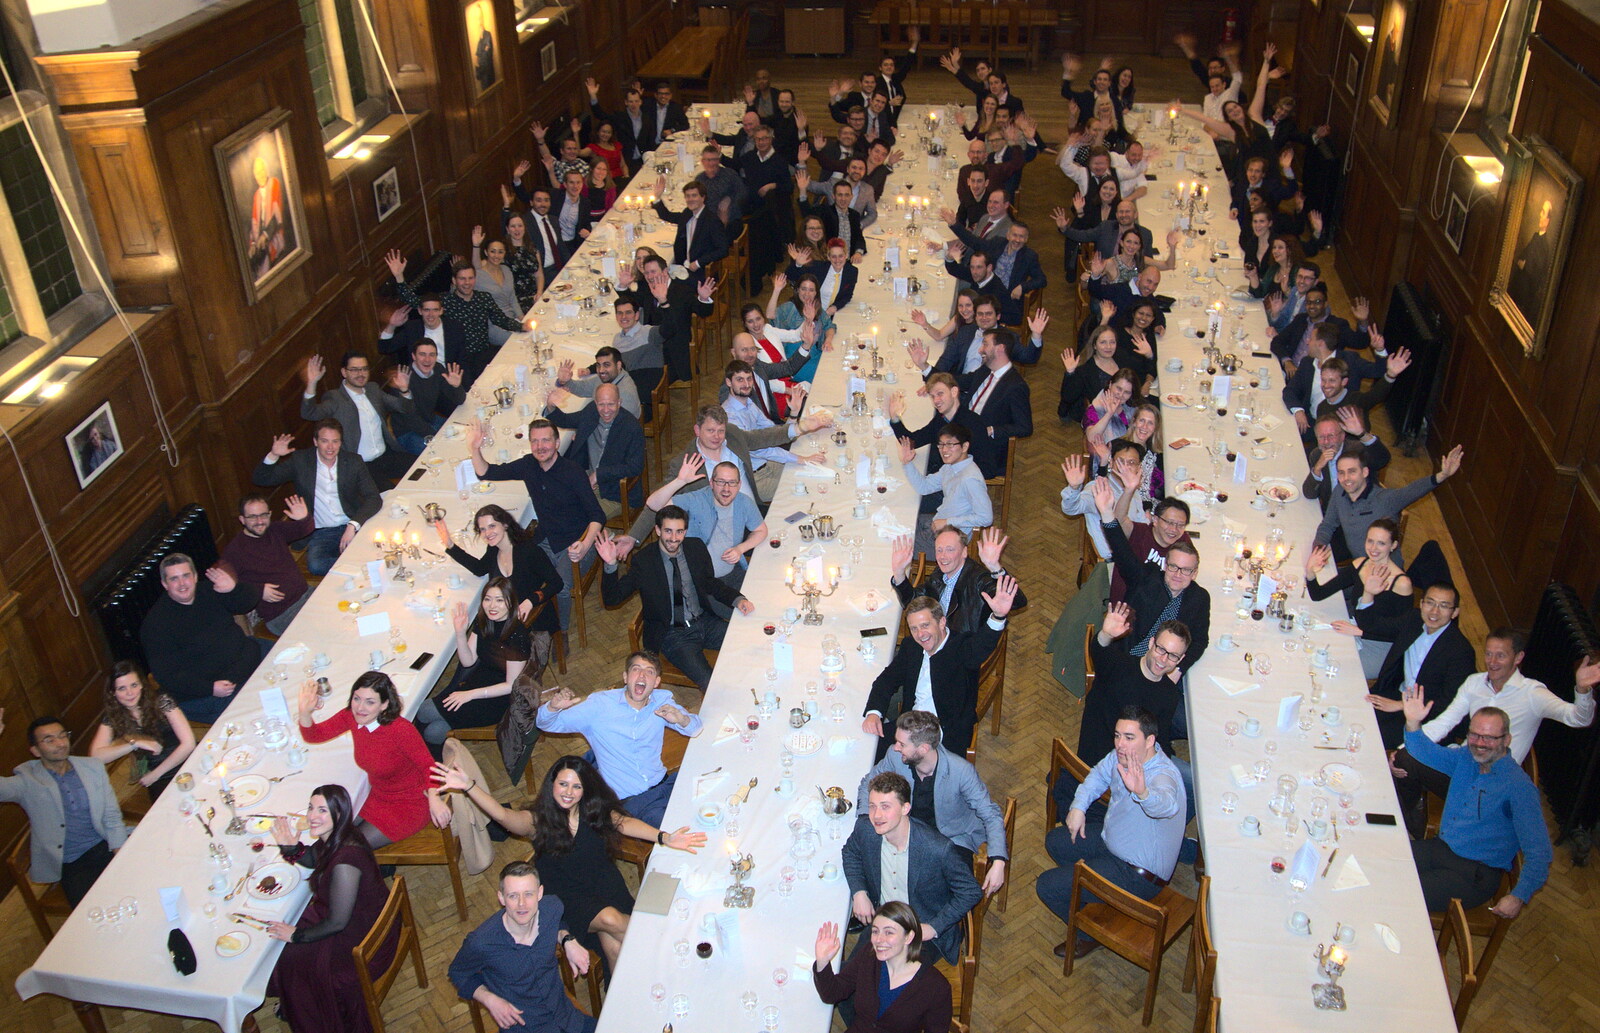 The room waves from SwiftKey's Ten Year Anniversary Reunion, Selwyn College, Cambridge - 11th January 2019